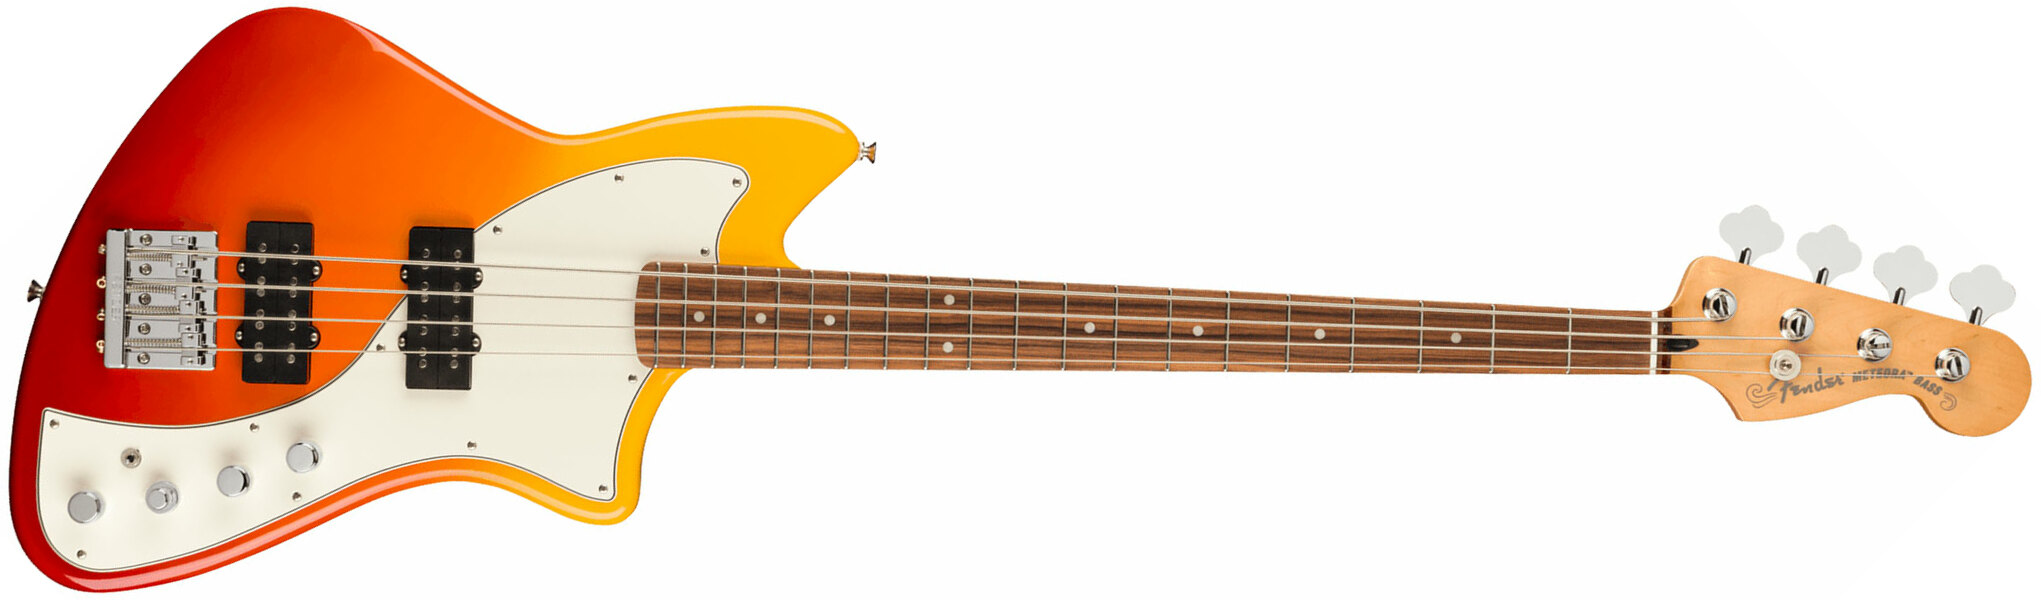 Fender Meteora Bass Active Player Plus Mex Pf - Tequila Sunrise - Basse Électrique Solid Body - Main picture